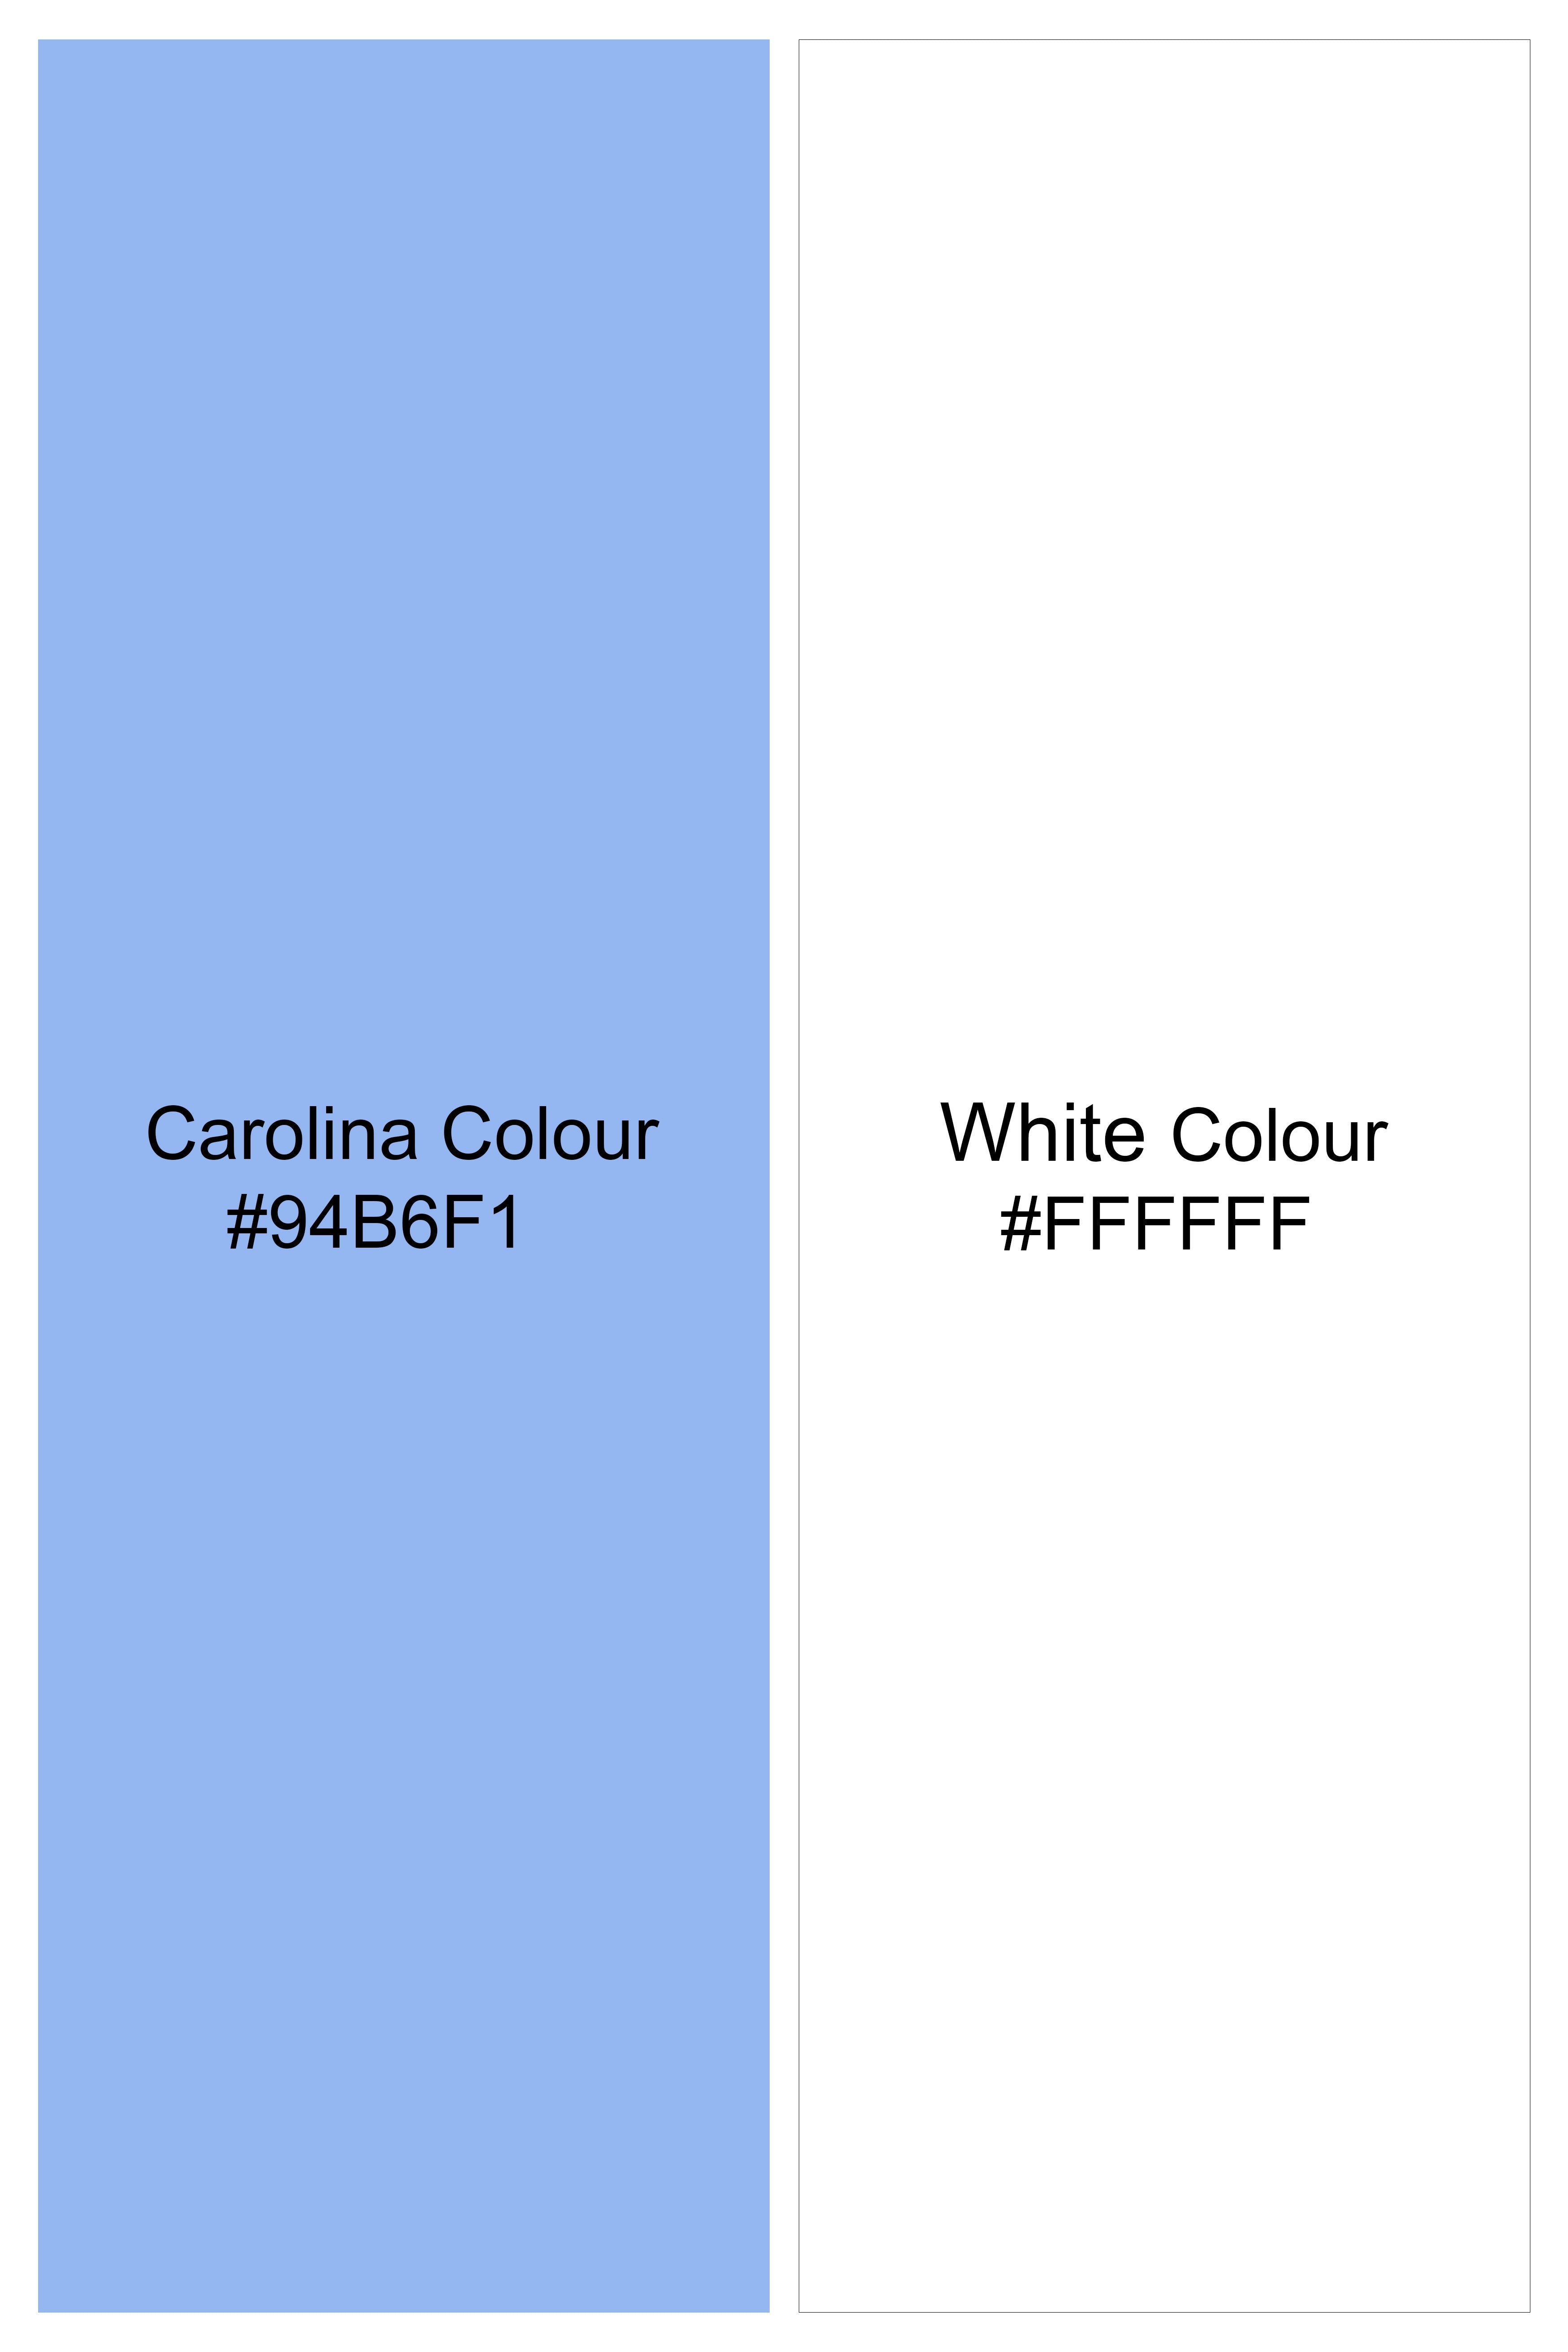 Carolina Blue and White Gingham Checkered Dobby Textured Premium Giza Cotton Shirt 10950-38, 10950-H-38, 10950-39, 10950-H-39, 10950-40, 10950-H-40, 10950-42, 10950-H-42, 10950-44, 10950-H-44, 10950-46, 10950-H-46, 10950-48, 10950-H-48, 10950-50, 10950-H-50, 10950-52, 10950-H-52